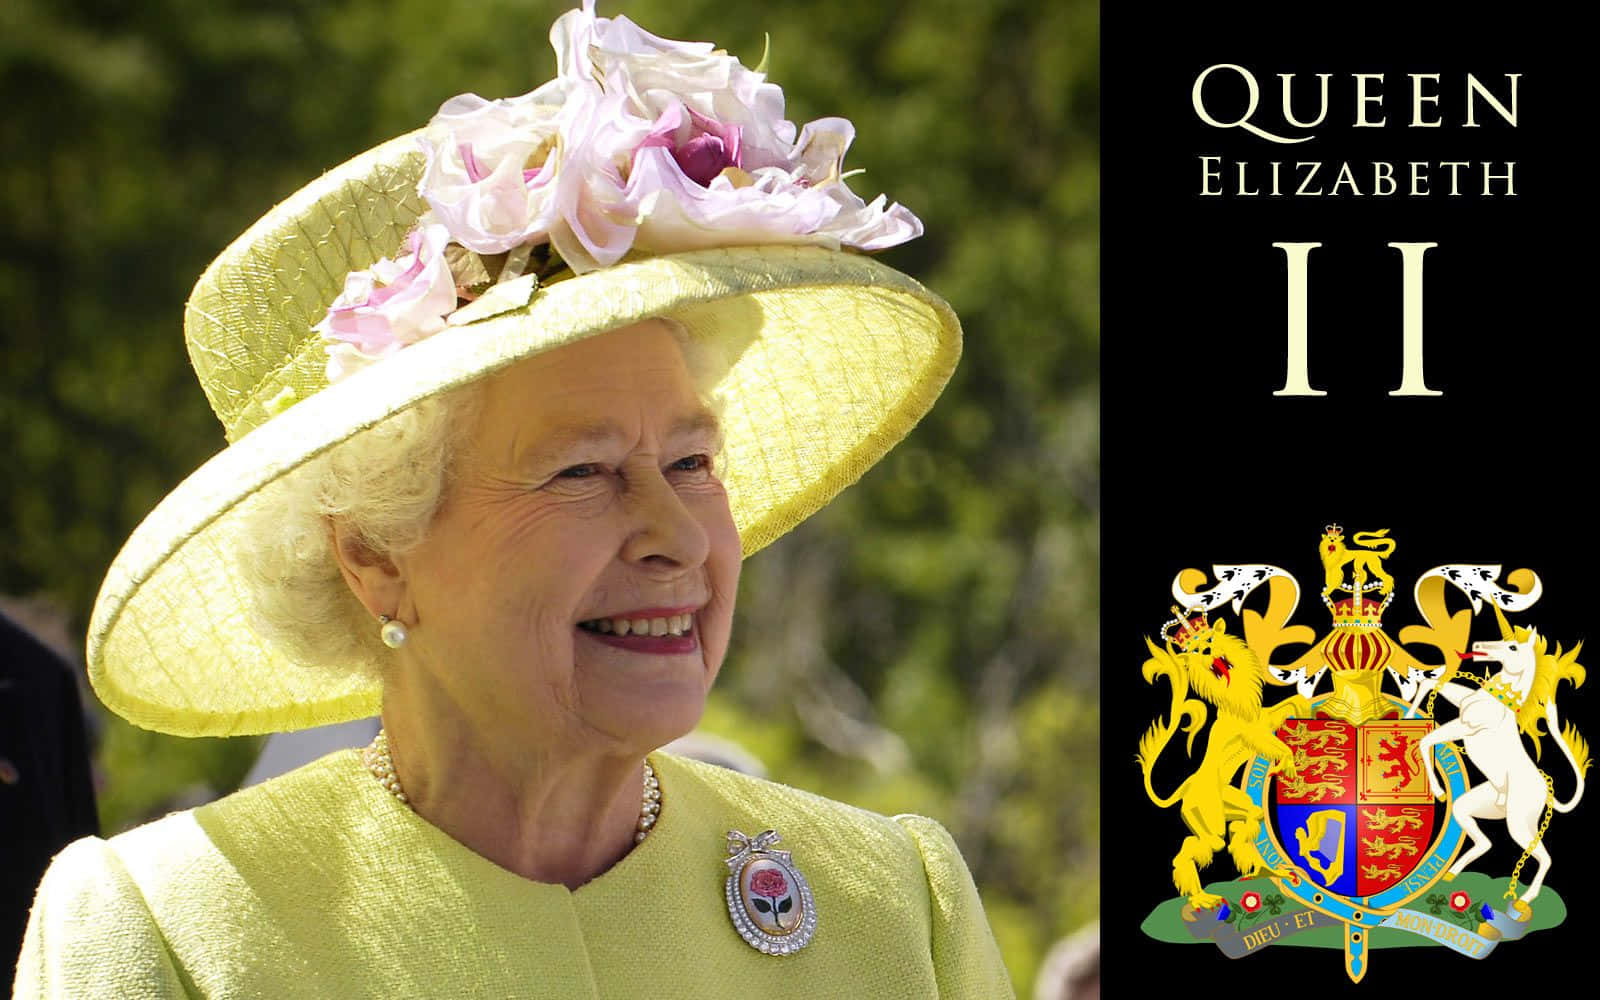 Her Majesty Queen Elizabeth II in a resplendent gown and tiara